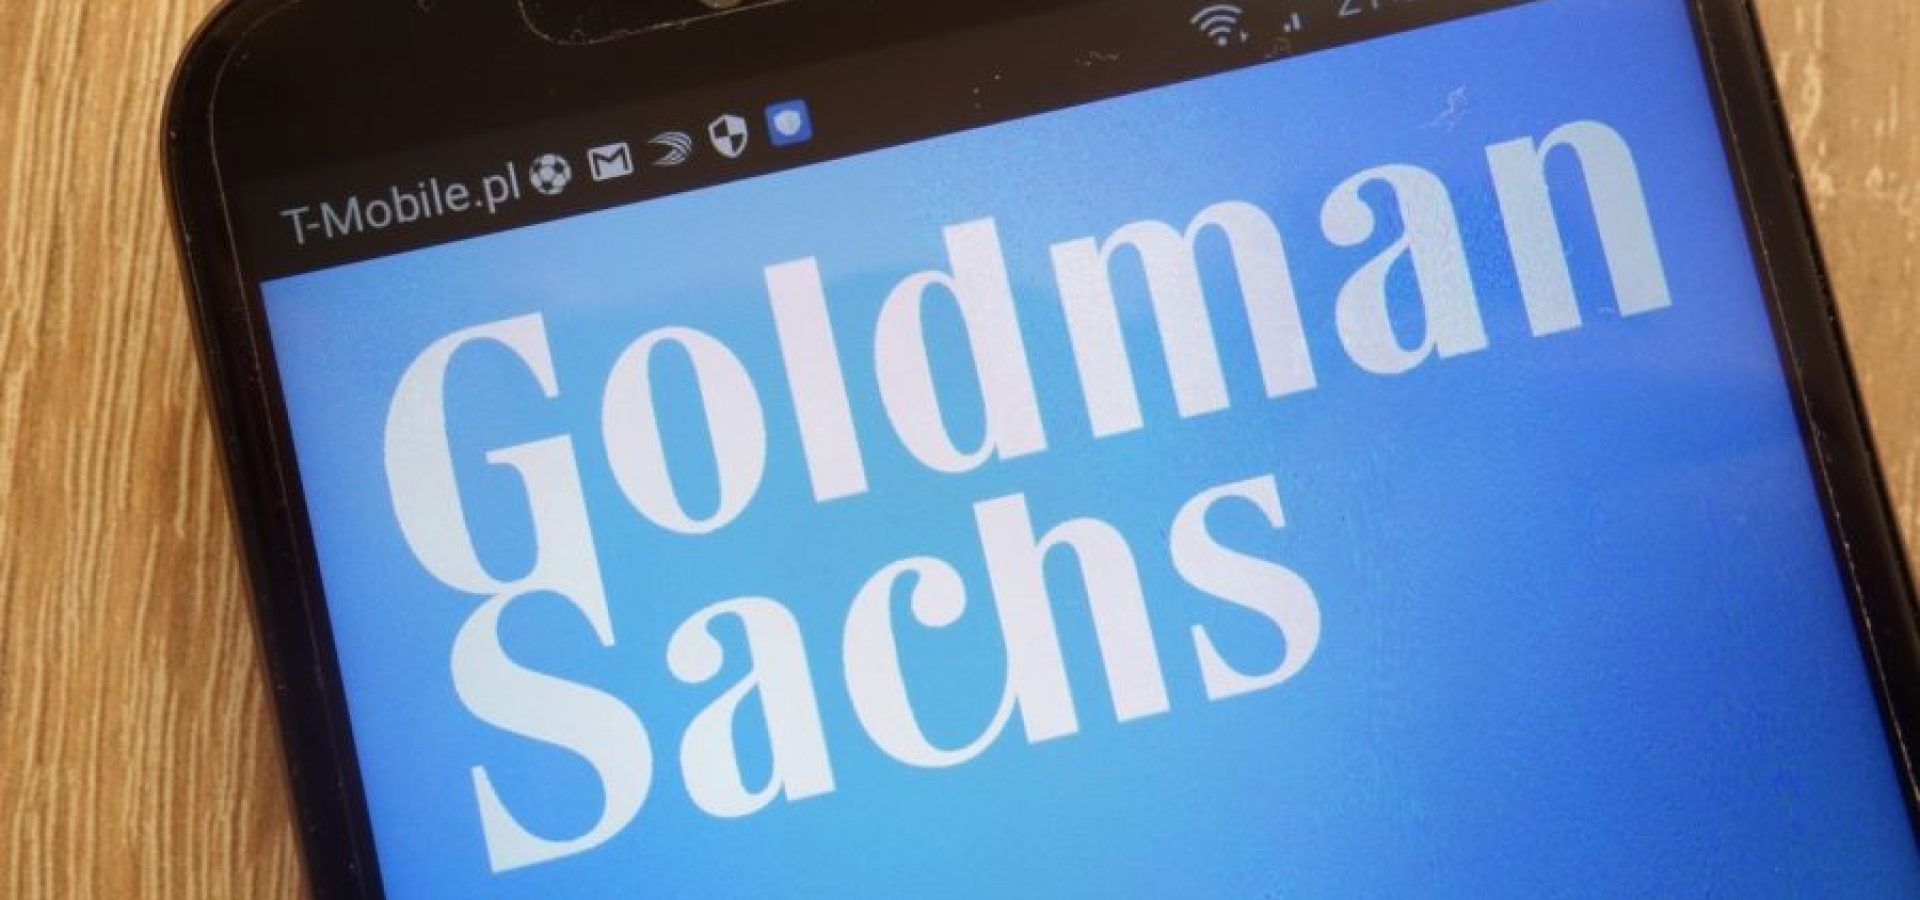 Goldman Sachs and main challenges